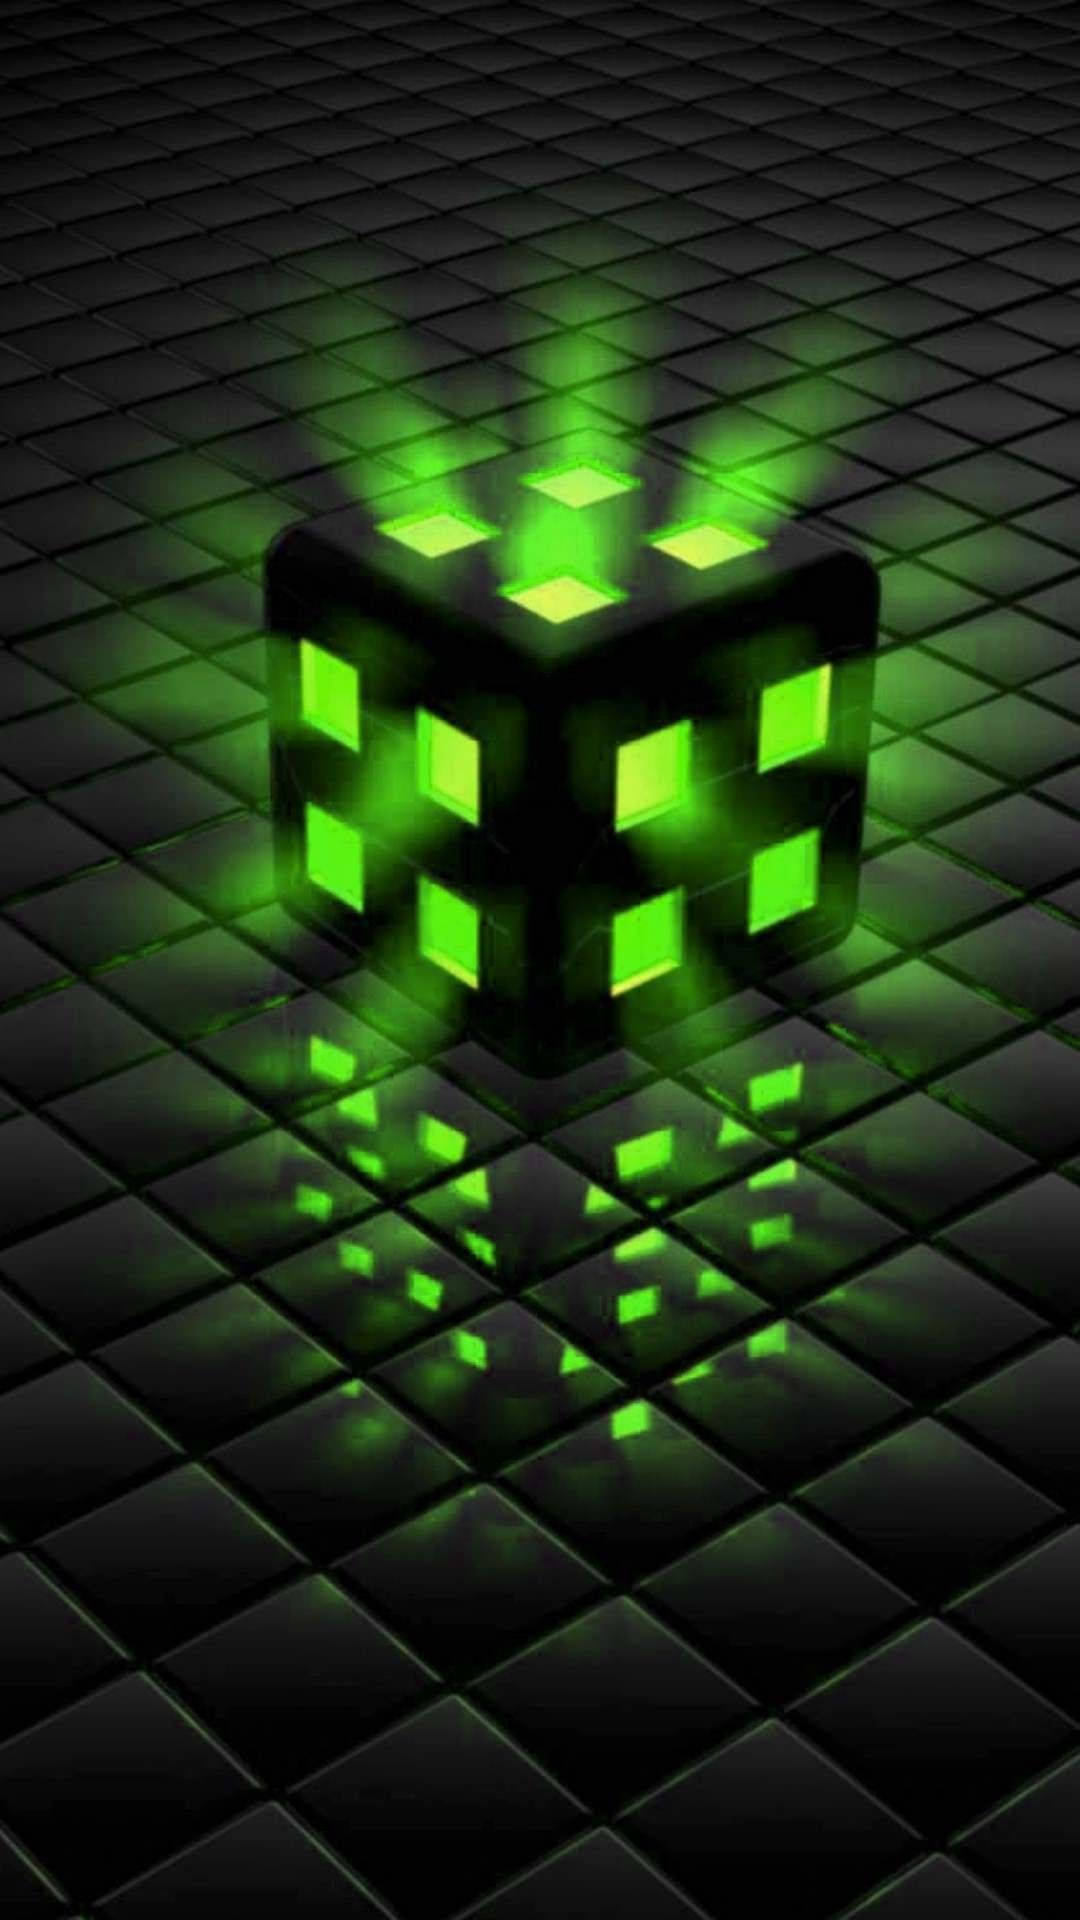 Caption: Illuminated Green Rubik's Cube